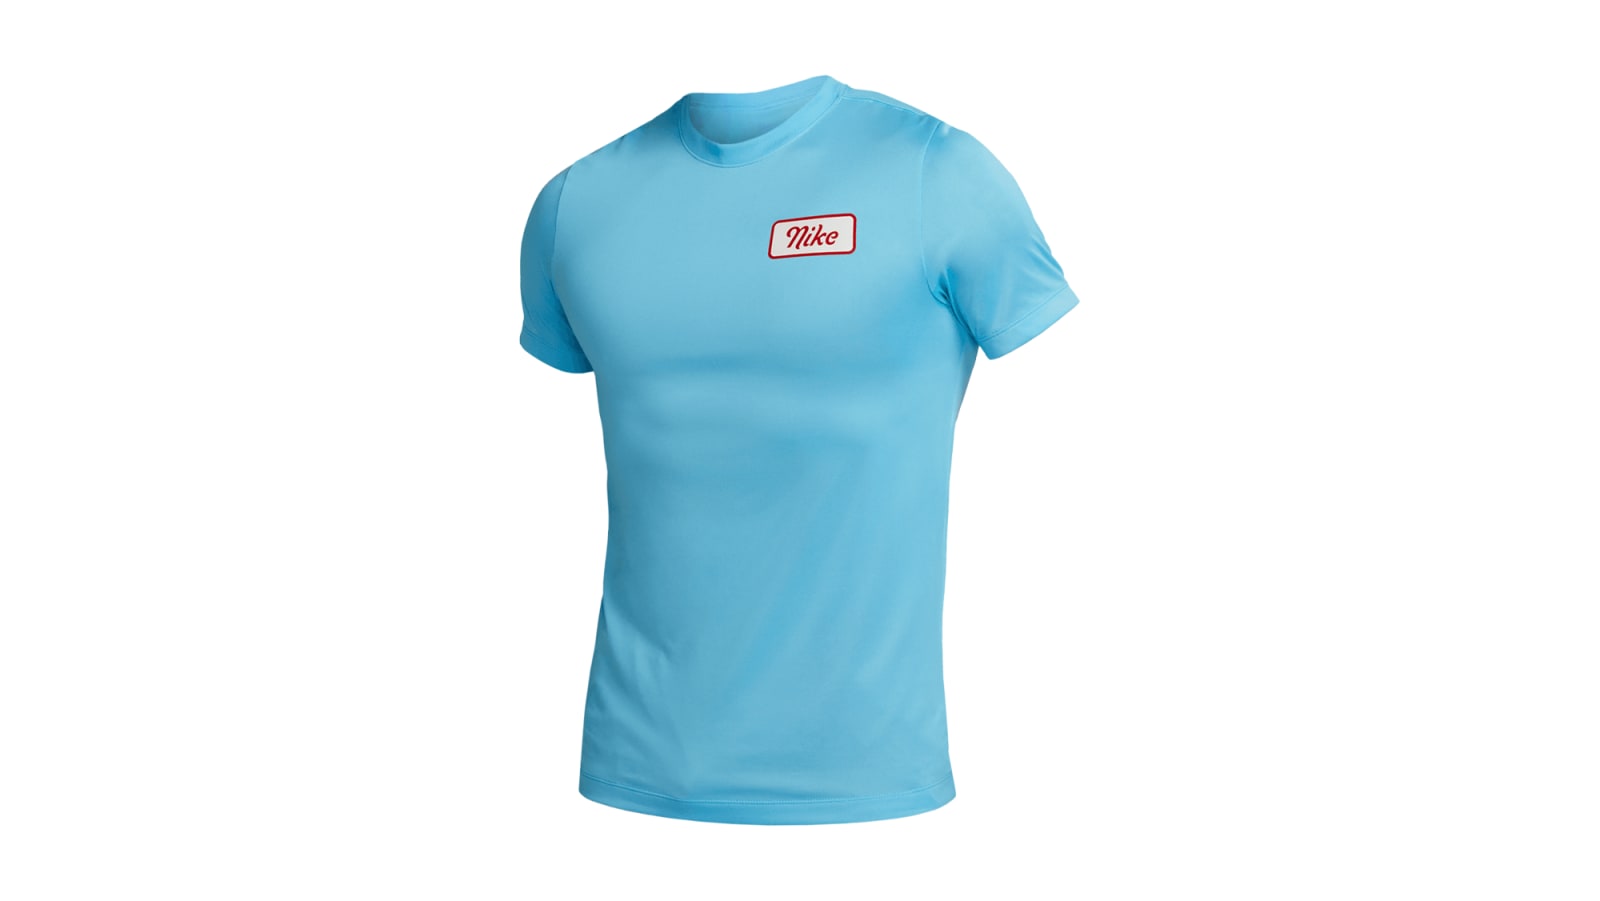 Nike Men's Dri-FIT “Body Shop” Men’s T-Shirt - Baltic Blue | Rogue Fitness